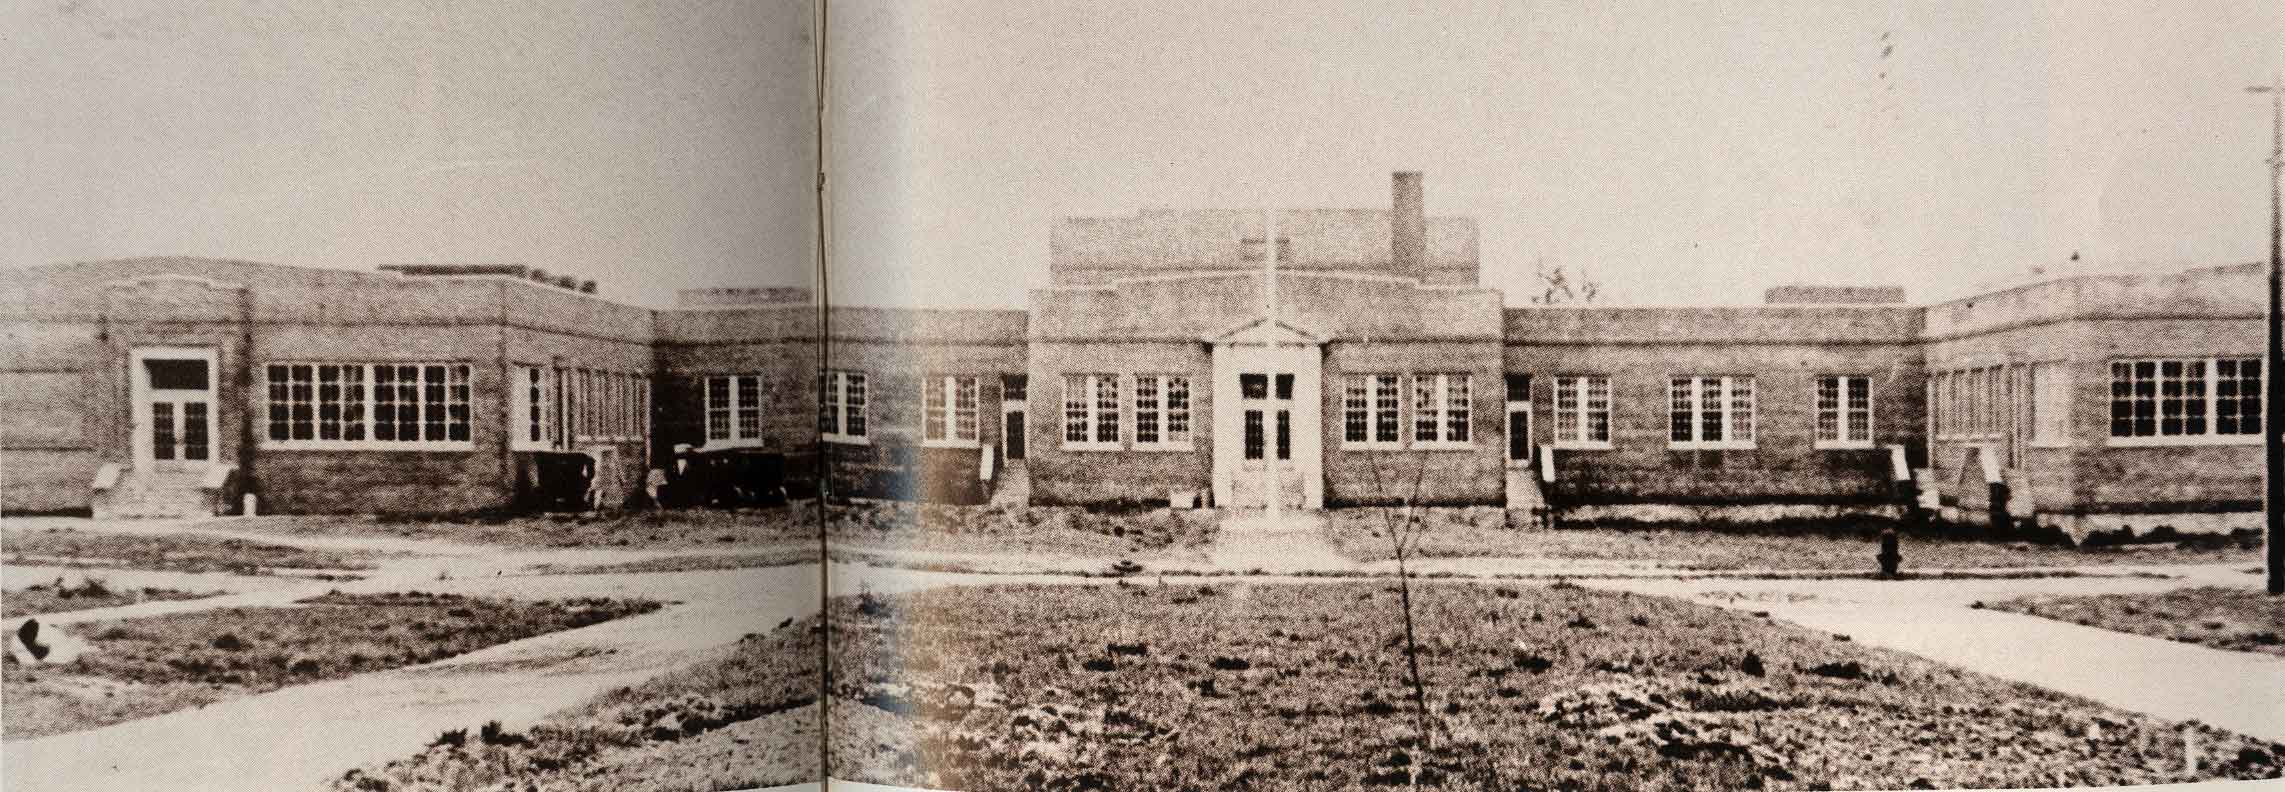  First Cradock High School